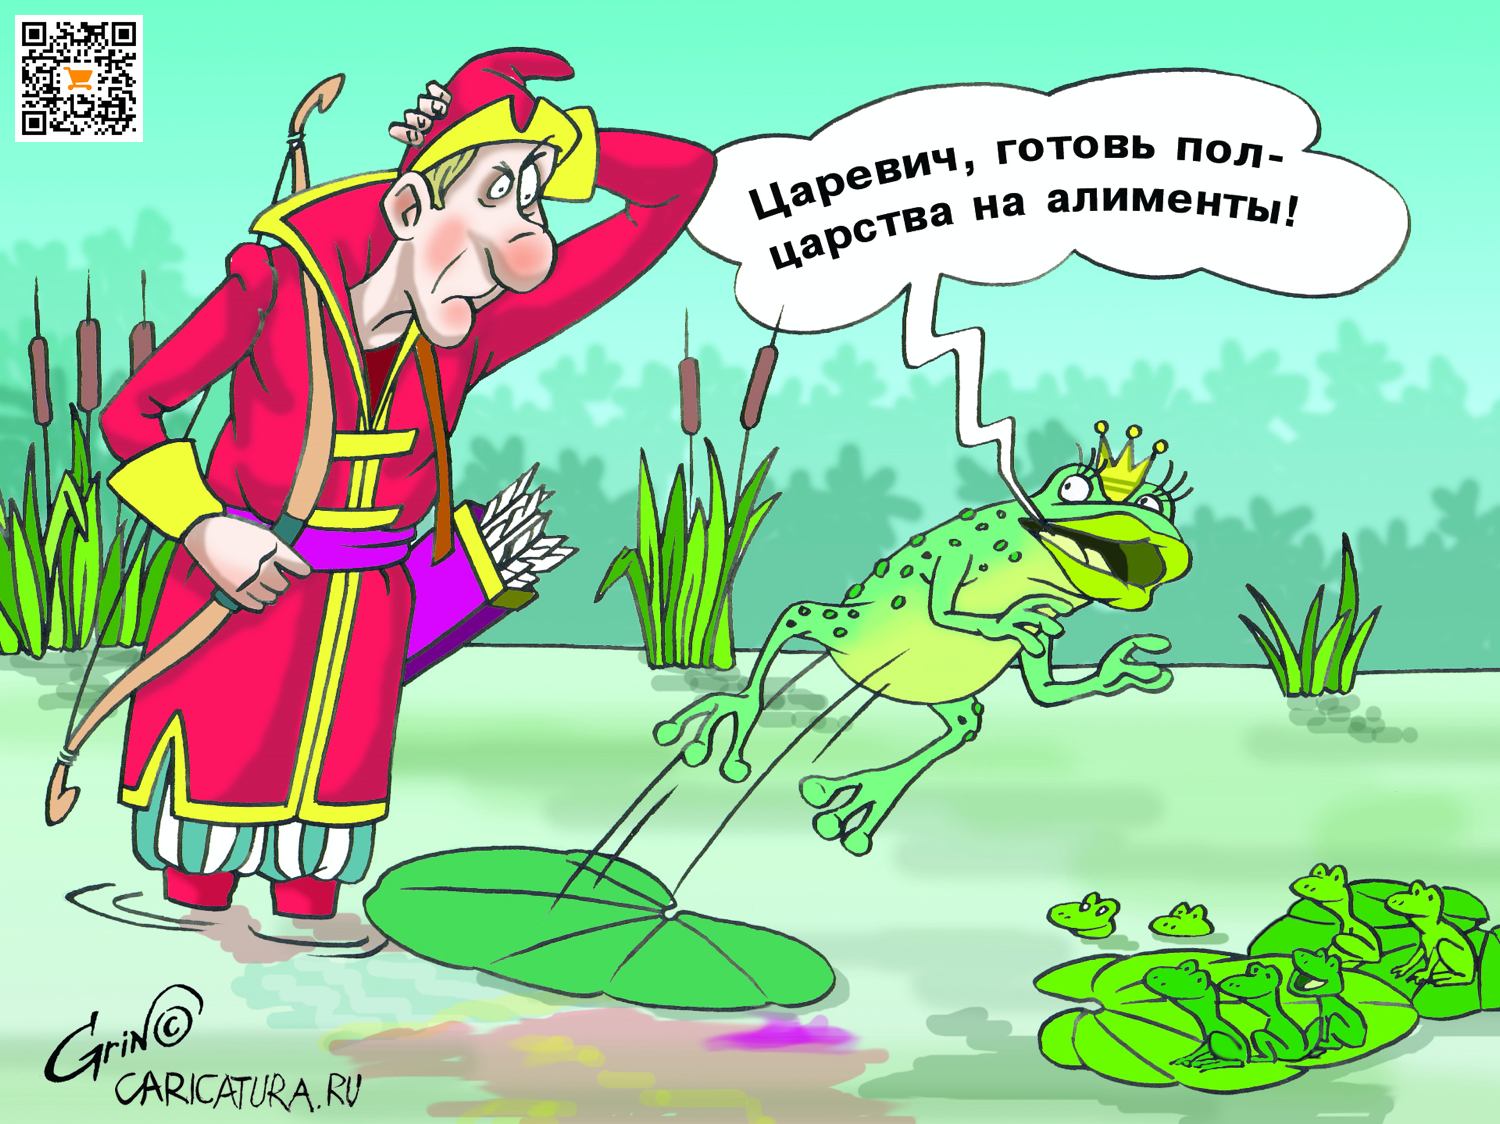 http://caricatura.ru/parad/grinchenko/pic/12623.jpg